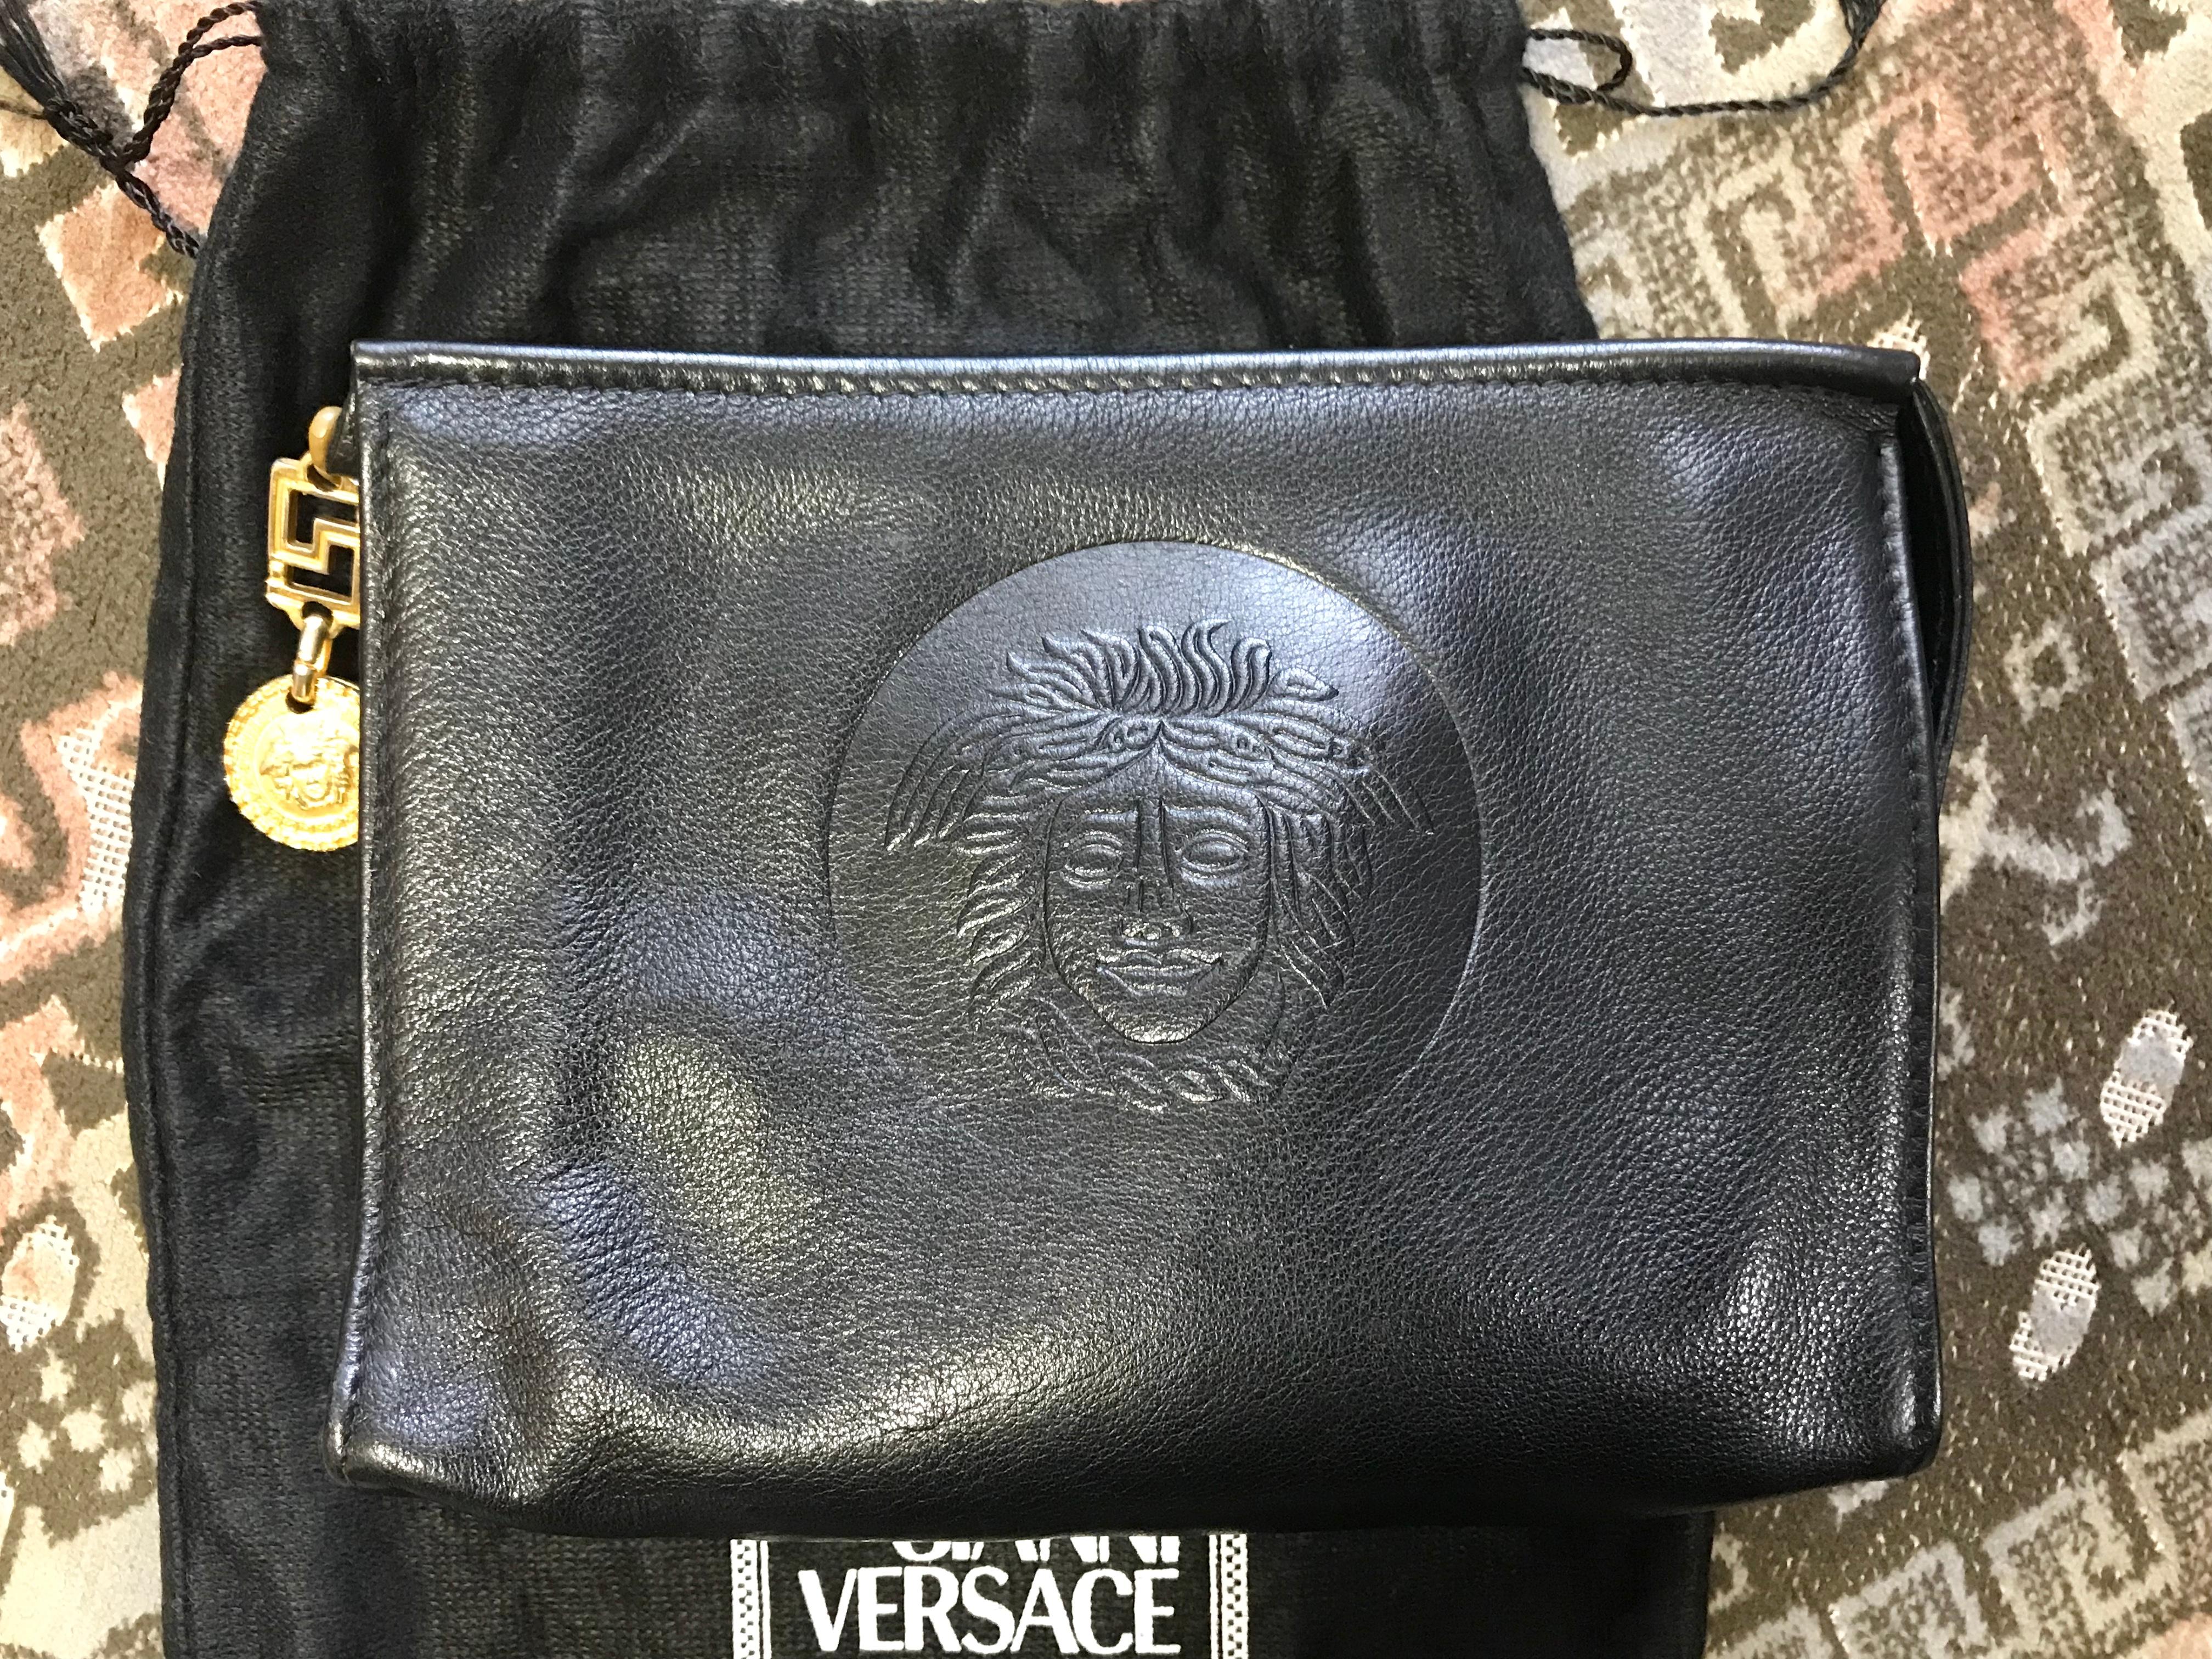 Vintage Gianni Versace black leather clutch purse, pouch, case bag with medusa. 3